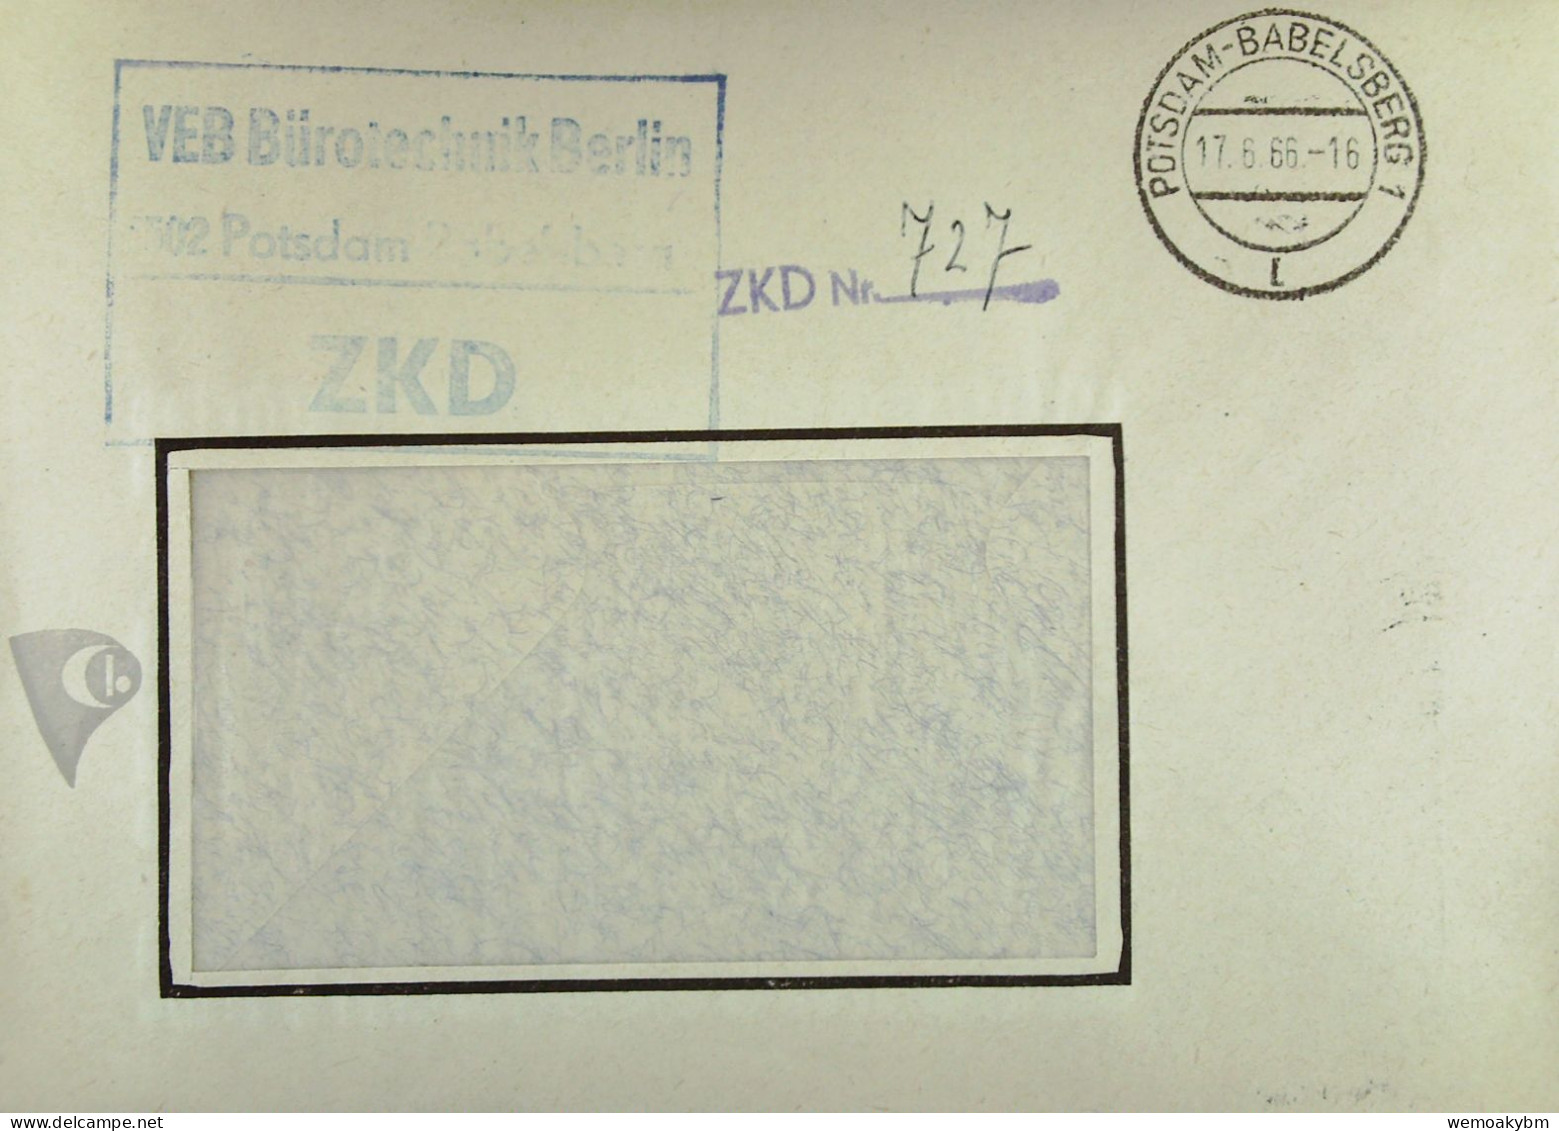 DDR-ZKD-Brief Mit Kastenstempel "VEB Bürotechnik Berlin 1502 Potsdam-Babelsberg" V. 17.6.66  ZKD-Nr. 727 Fensterumschlag - Briefe U. Dokumente